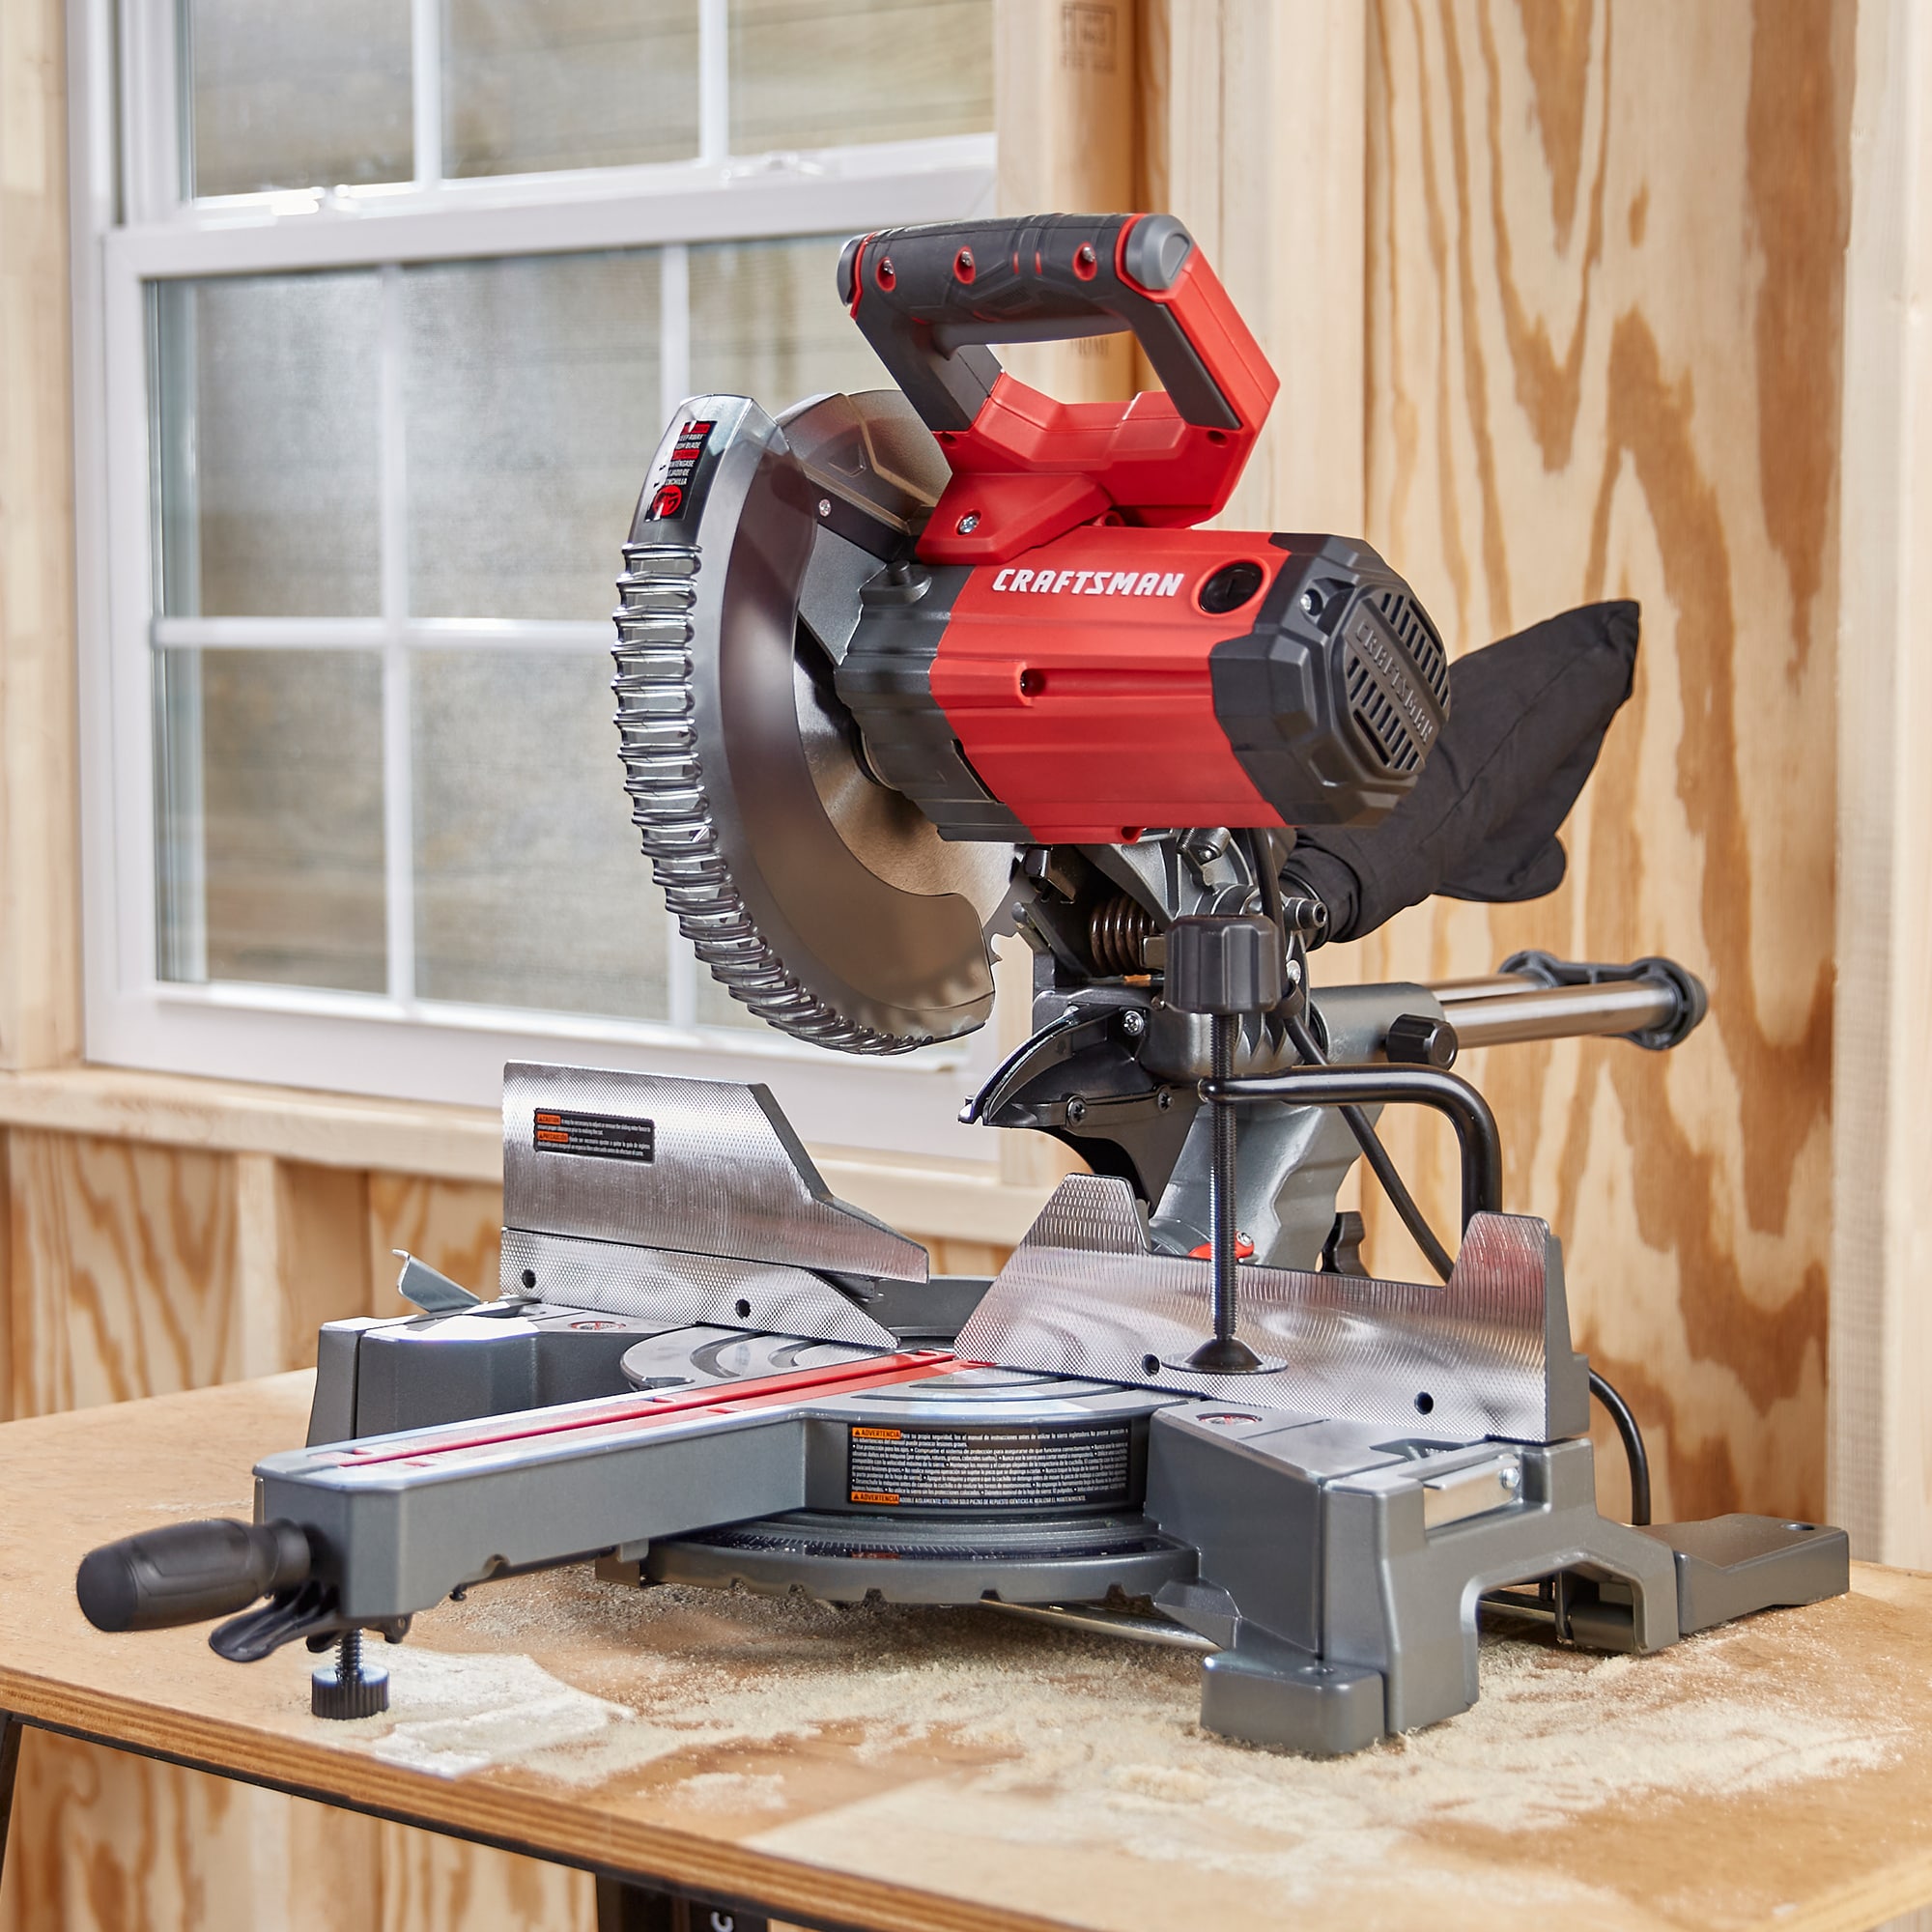 Black & decker 10 inch miter chop saw - tools - by owner - sale - craigslist